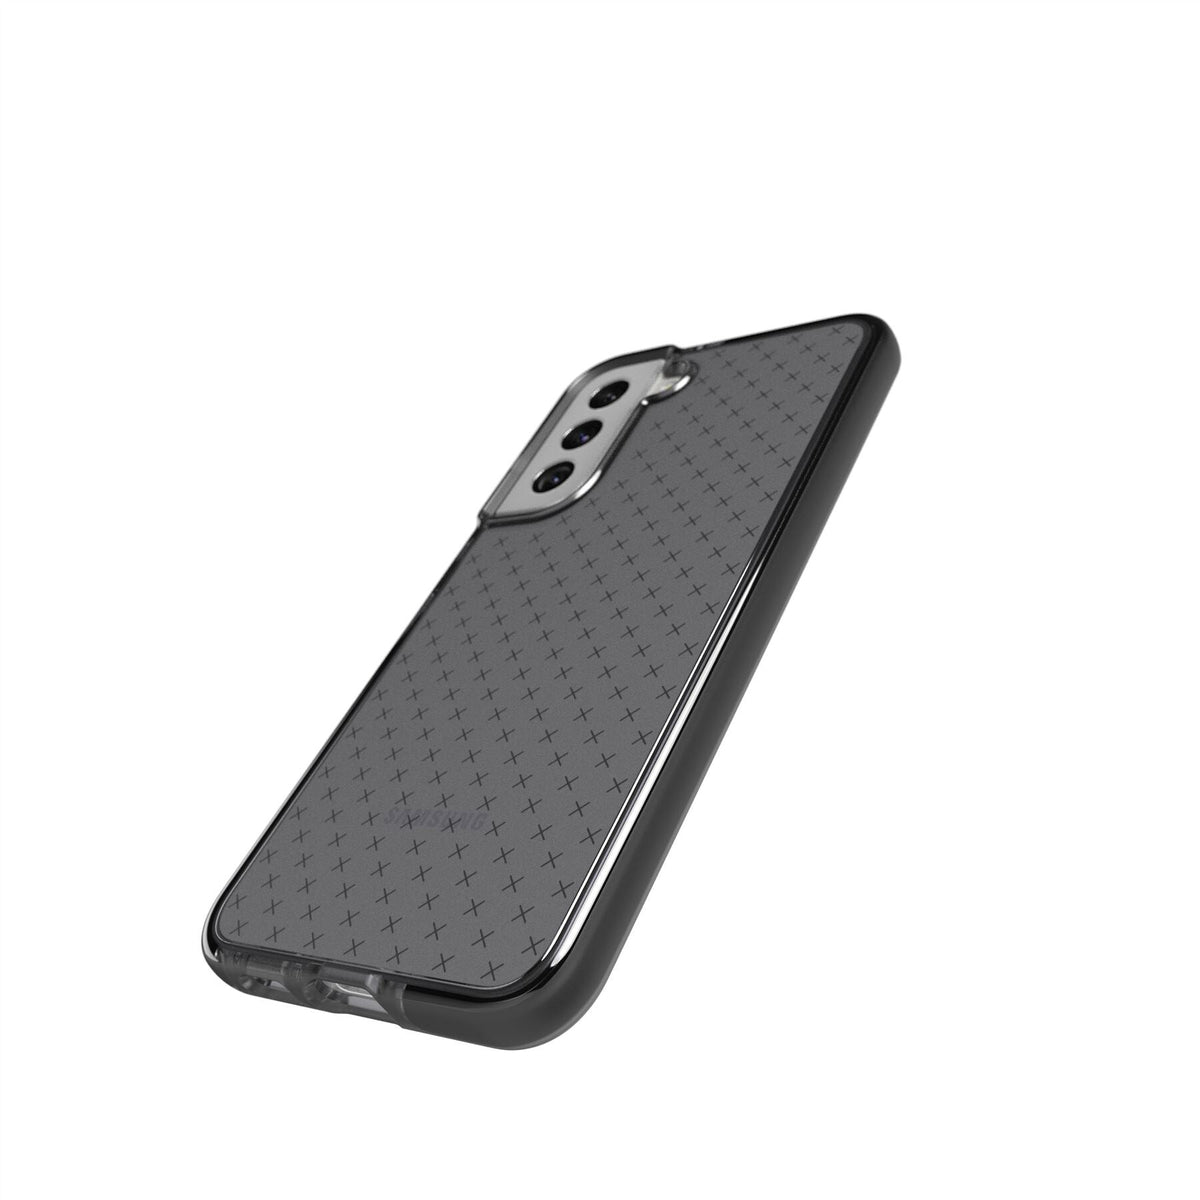 Tech21 Evo Check mobile phone case for Galaxy S22+ in Black